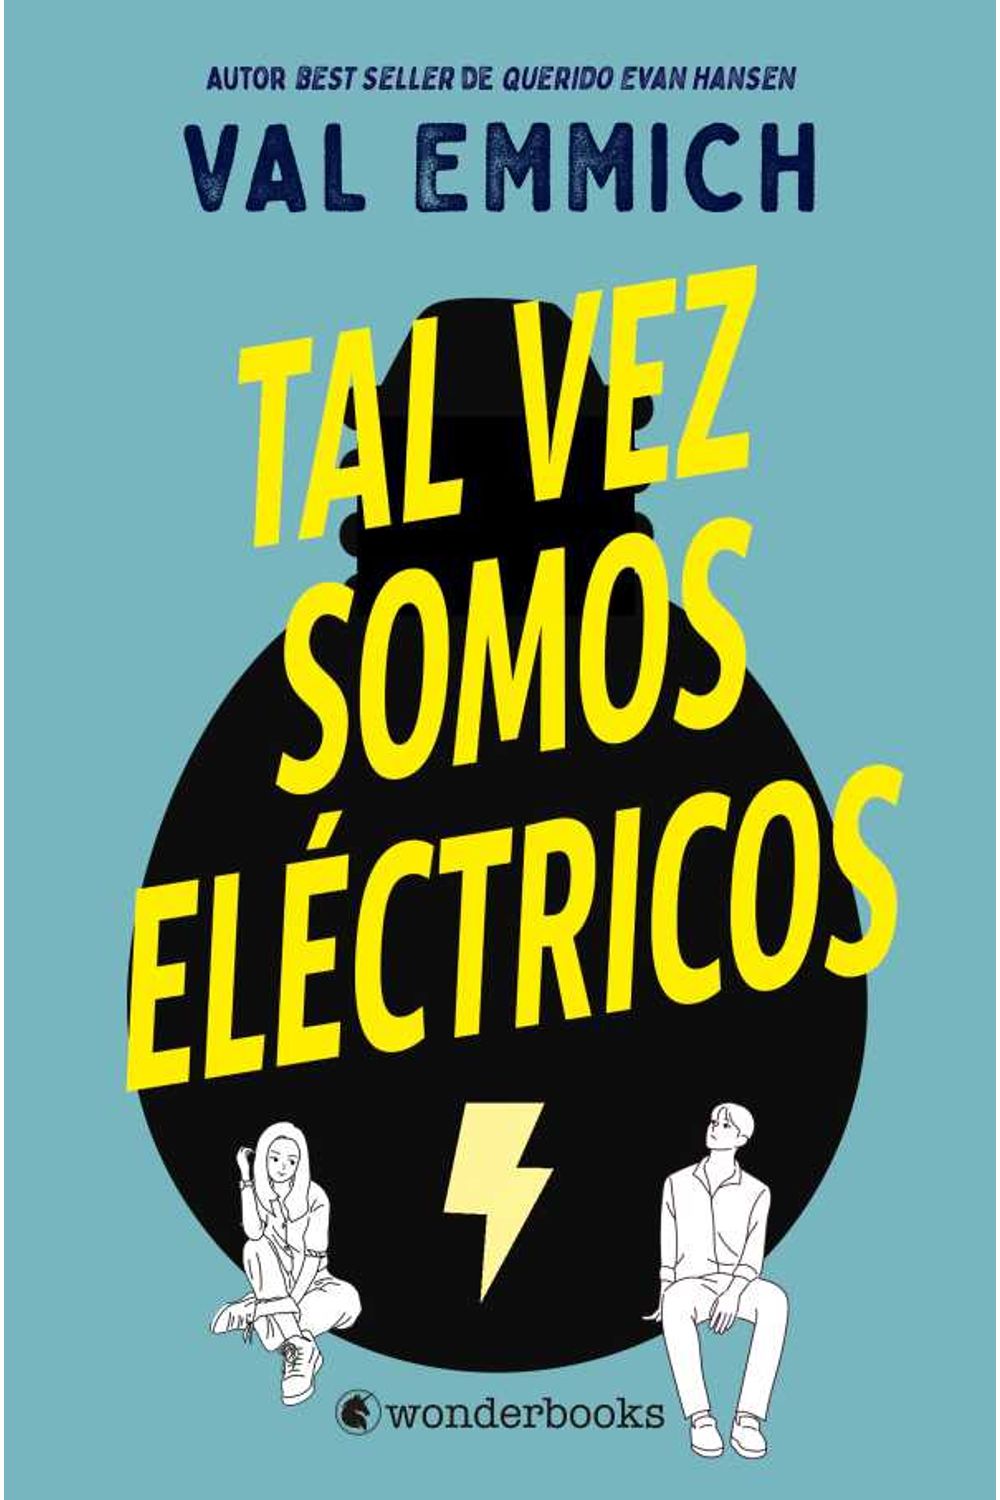 bw-tal-vez-somos-eleacutectricos-wonderbooks-9788418509308